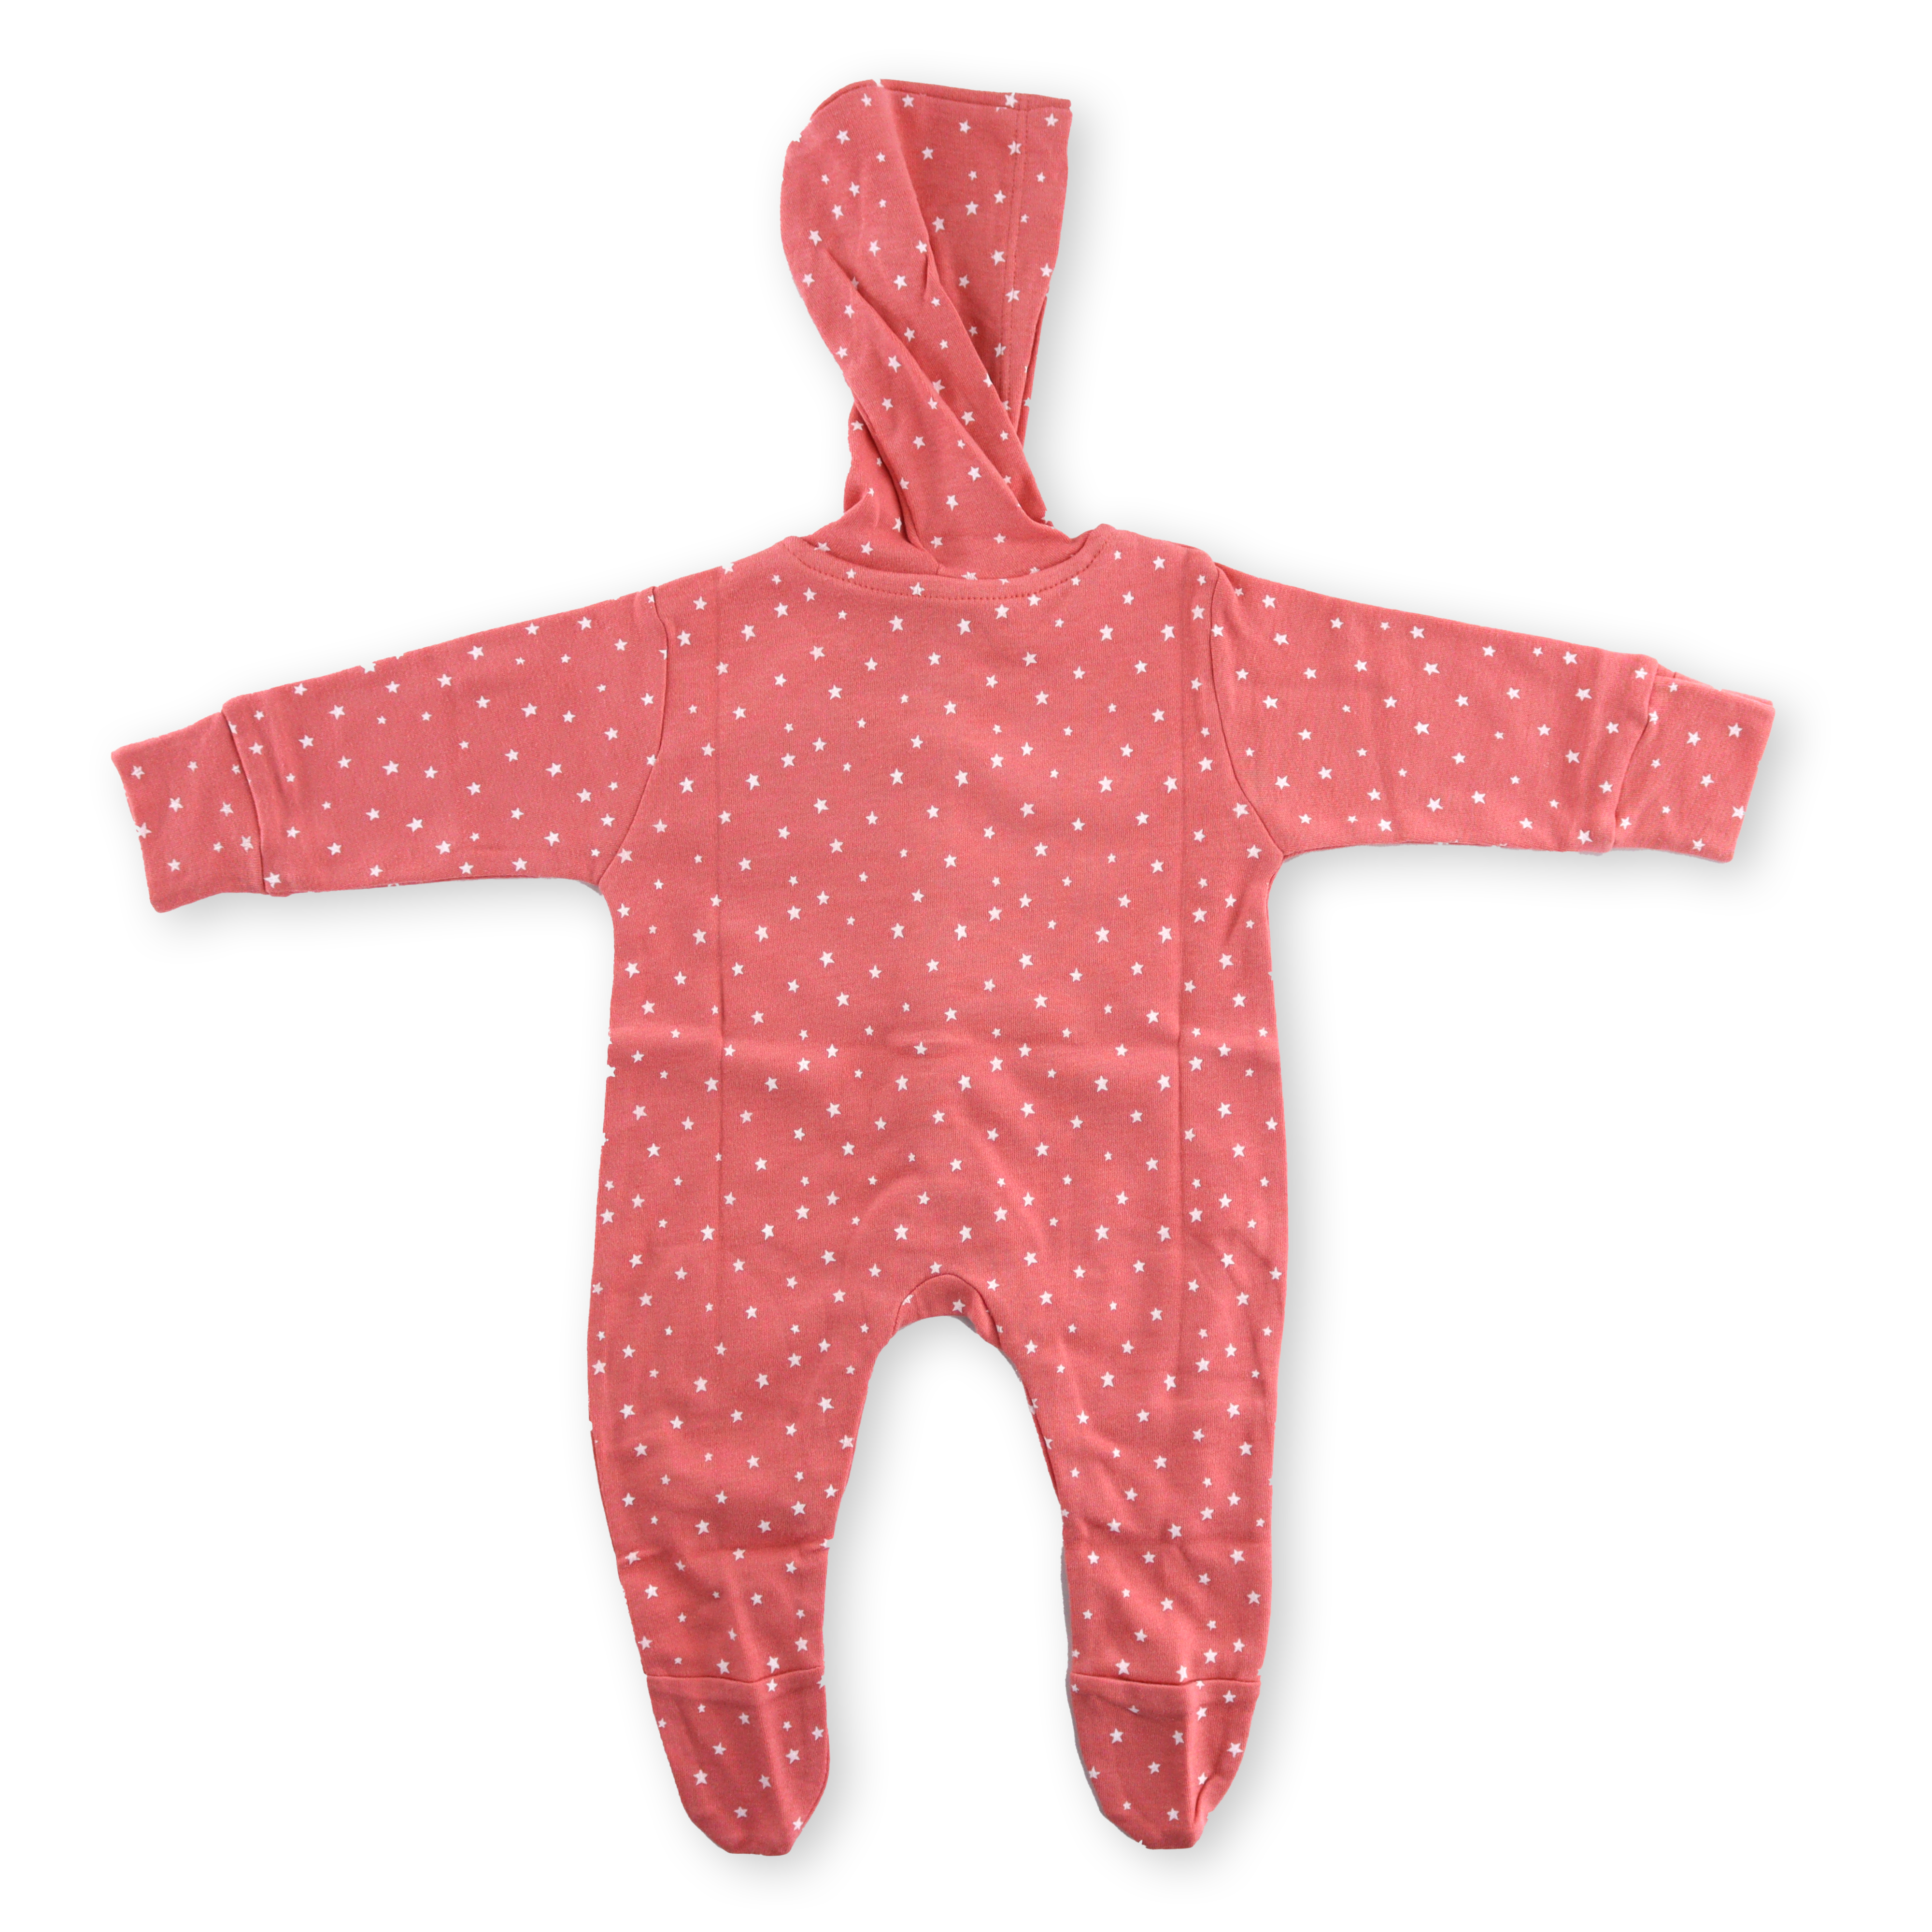 Infants Long Sleeve Cotton Sleep Suit/Romper/Jumpsuit/Bodysuit/for Baby Boy & Baby Girl(PreemieNew Born -3 Months)